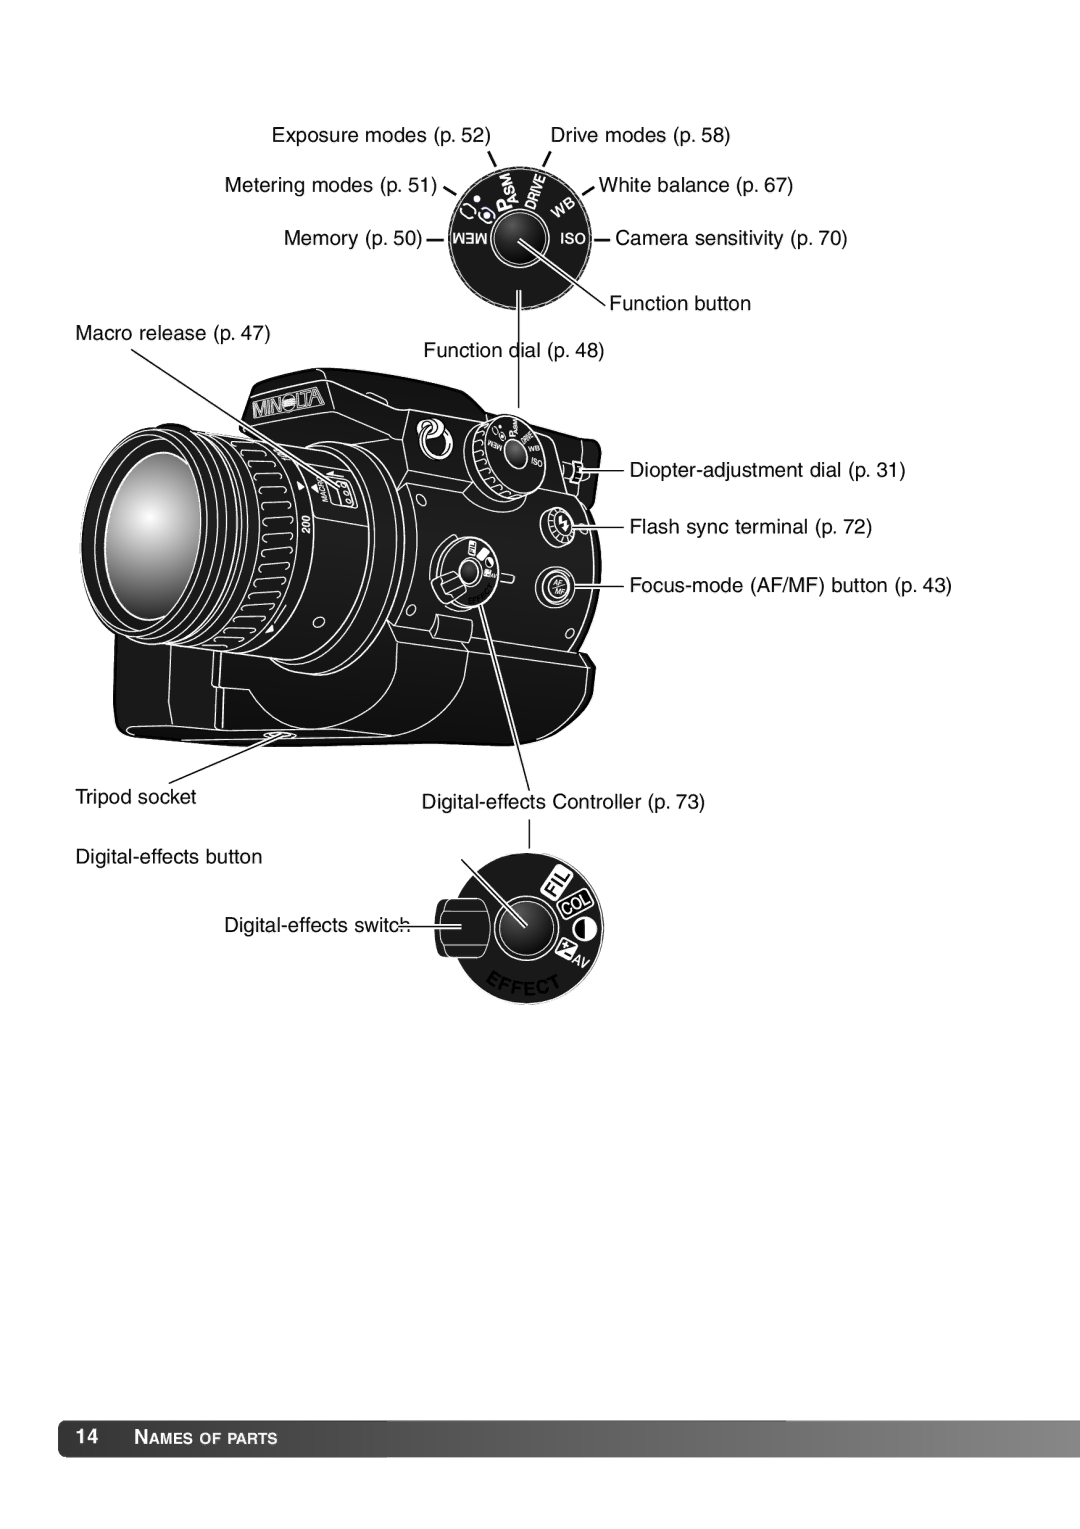 Konica Minolta 7Hi instruction manual Focus-mode AF/MF button p 